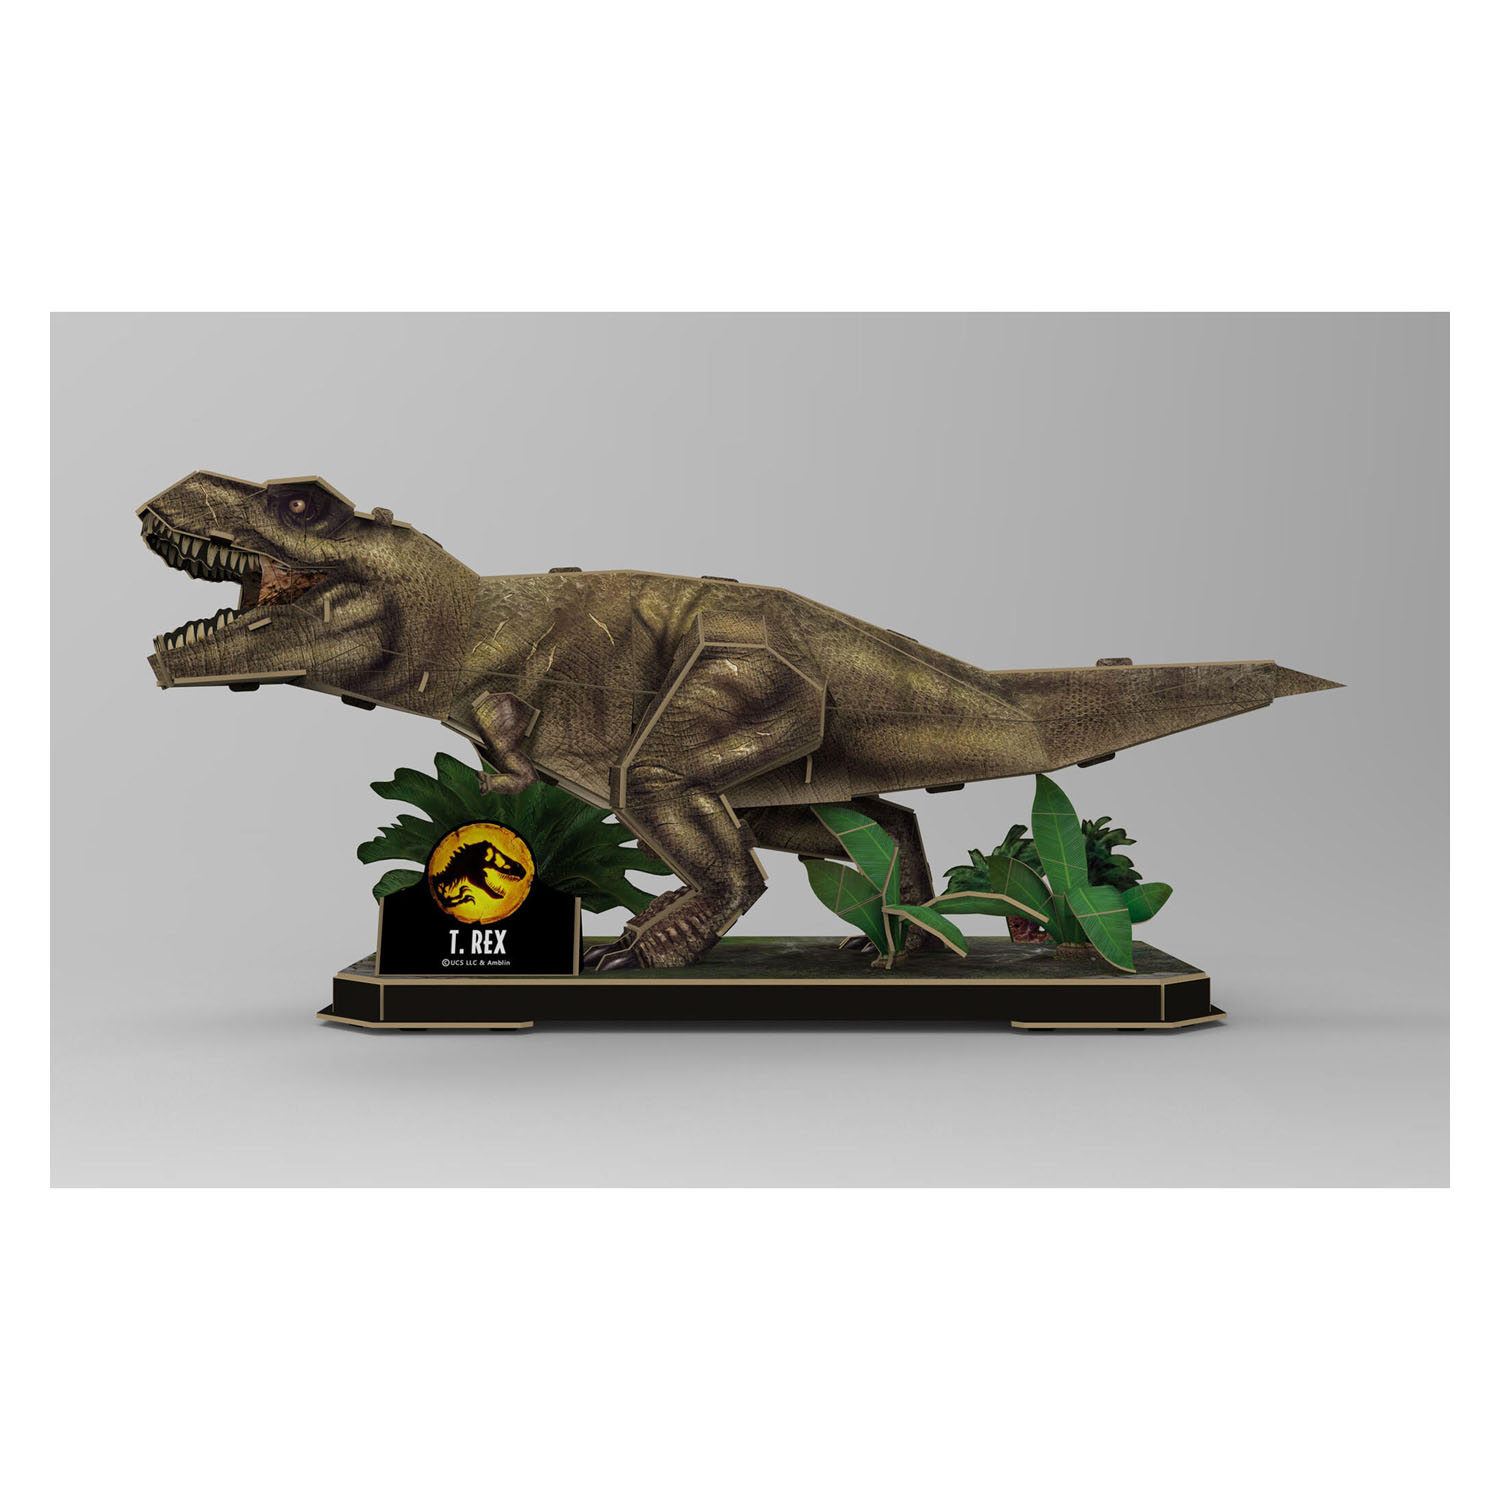 Revell 3D-Puzzle-Bausatz – Jurassic World Dominion T-Rex